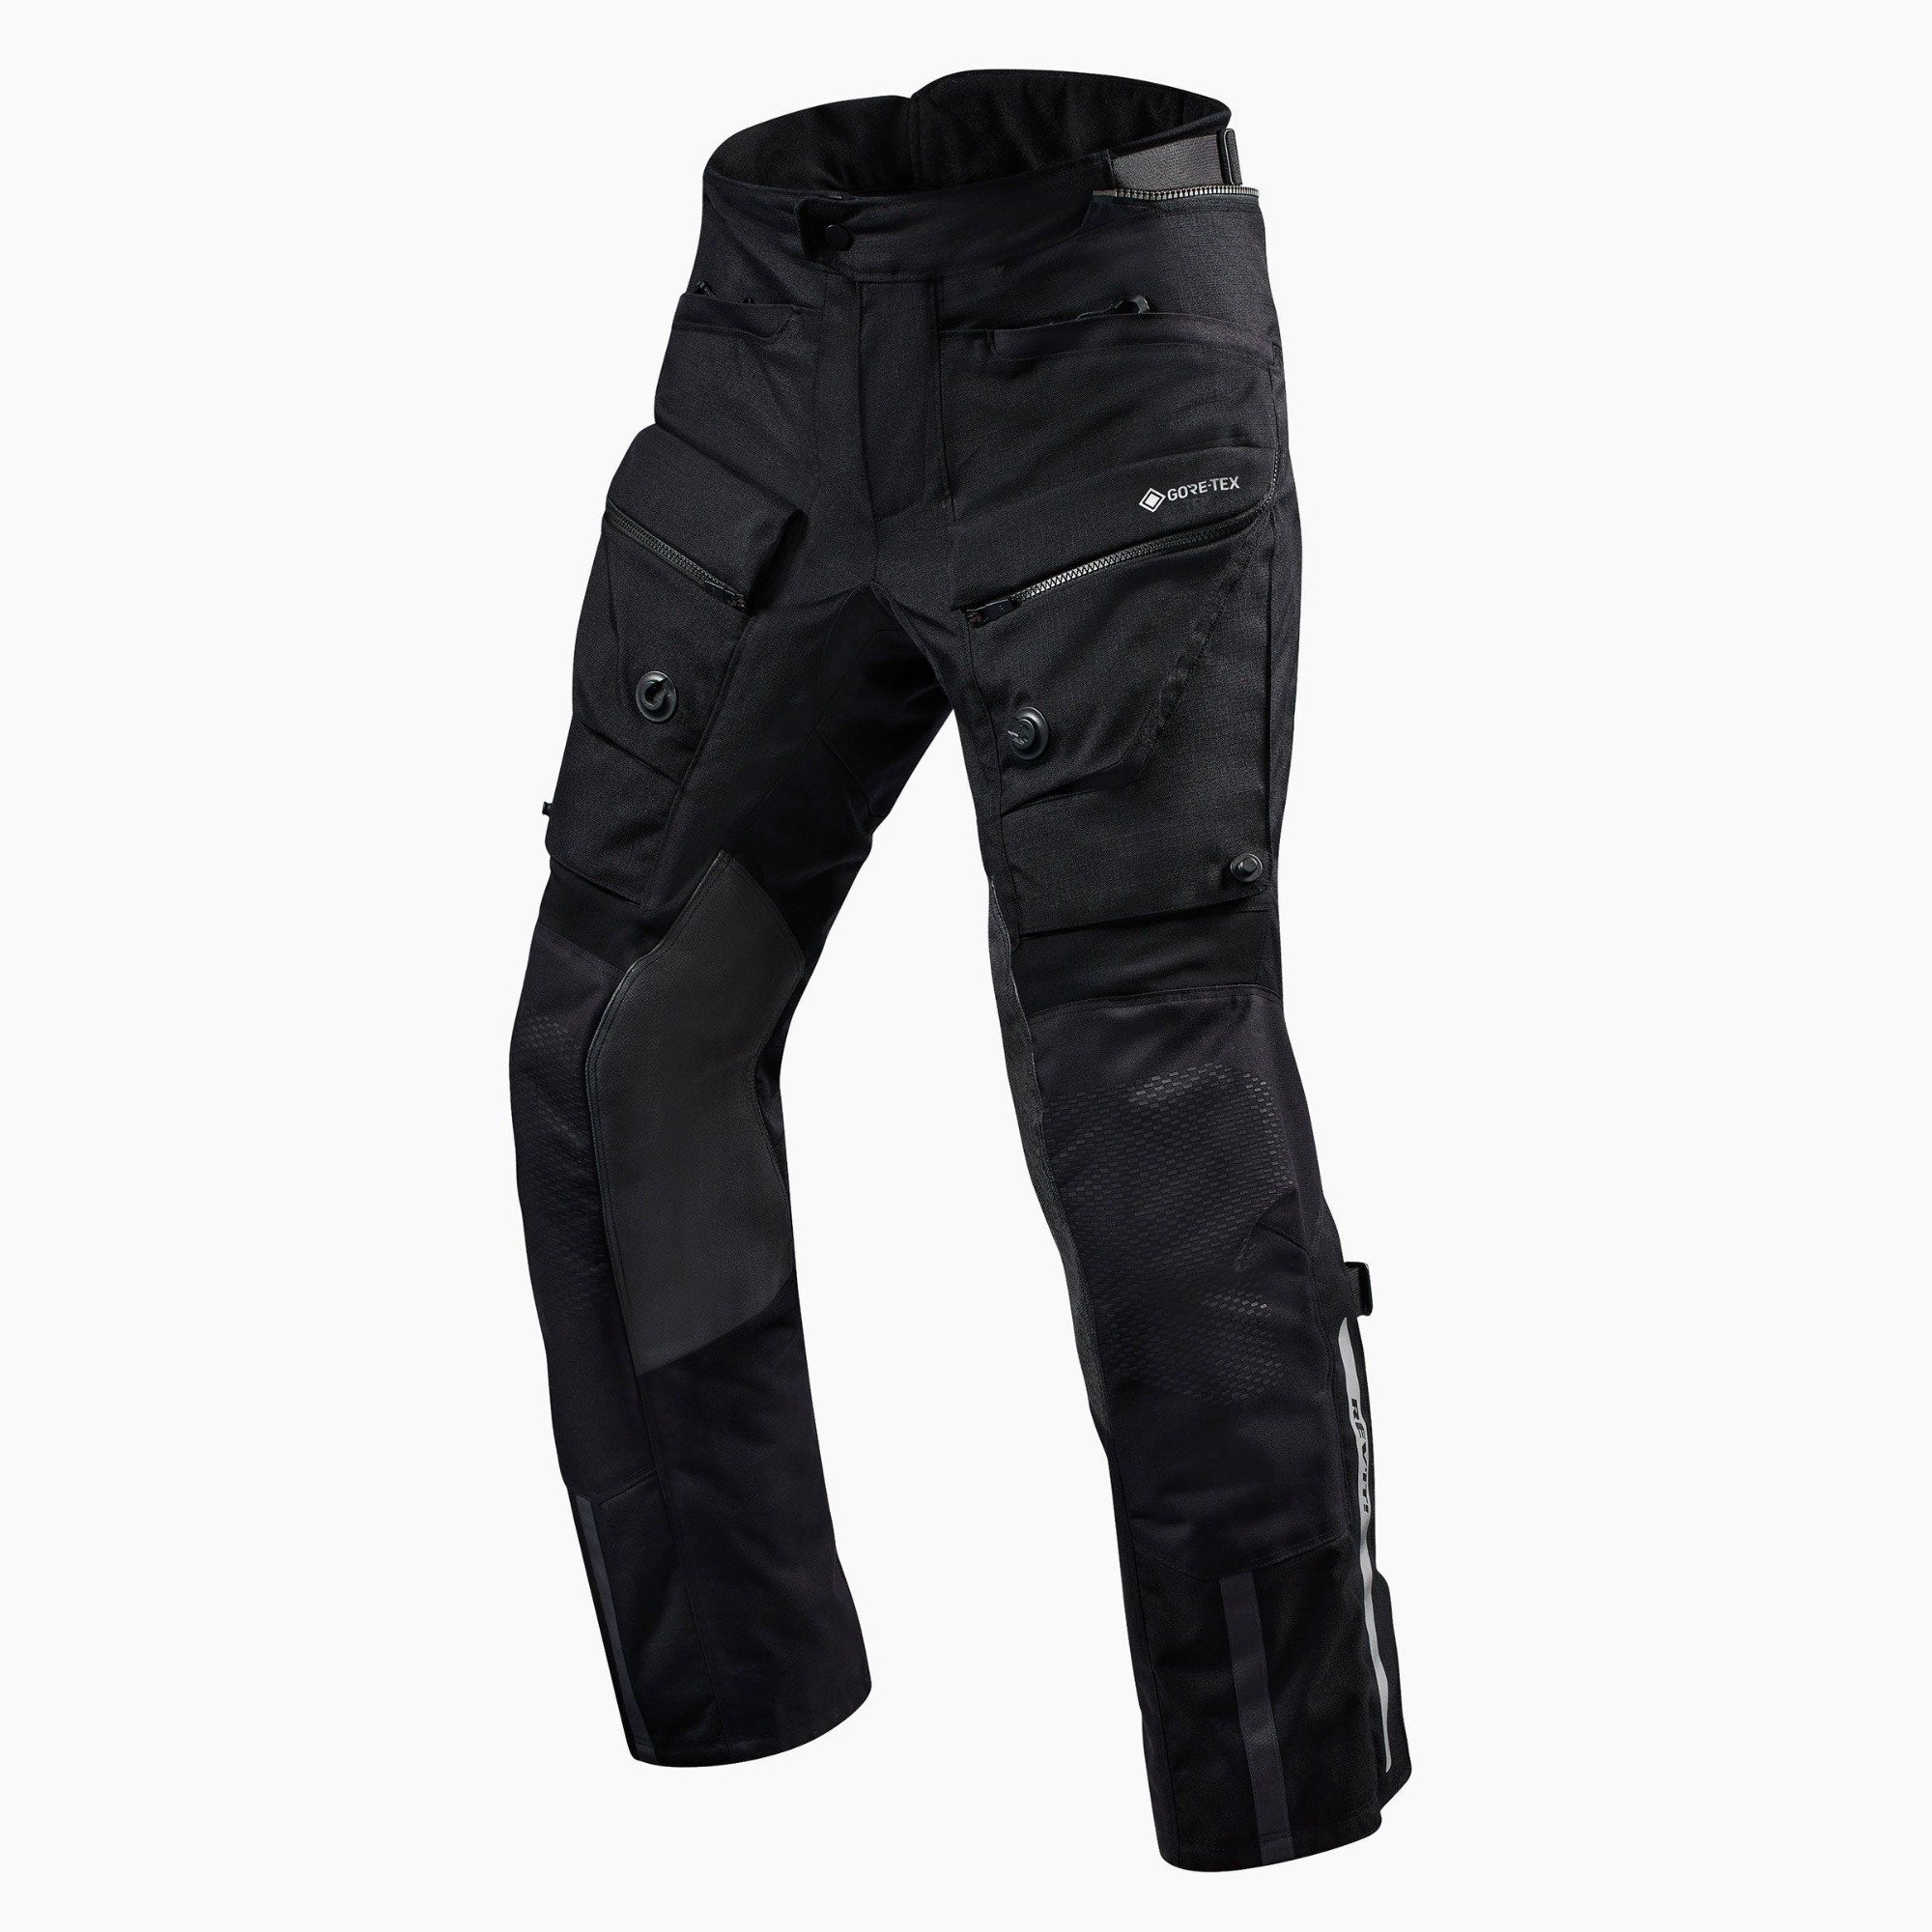 Image of REV'IT! Trousers Defender 3 GTX Black Short Motorcycle Pants Size M EN